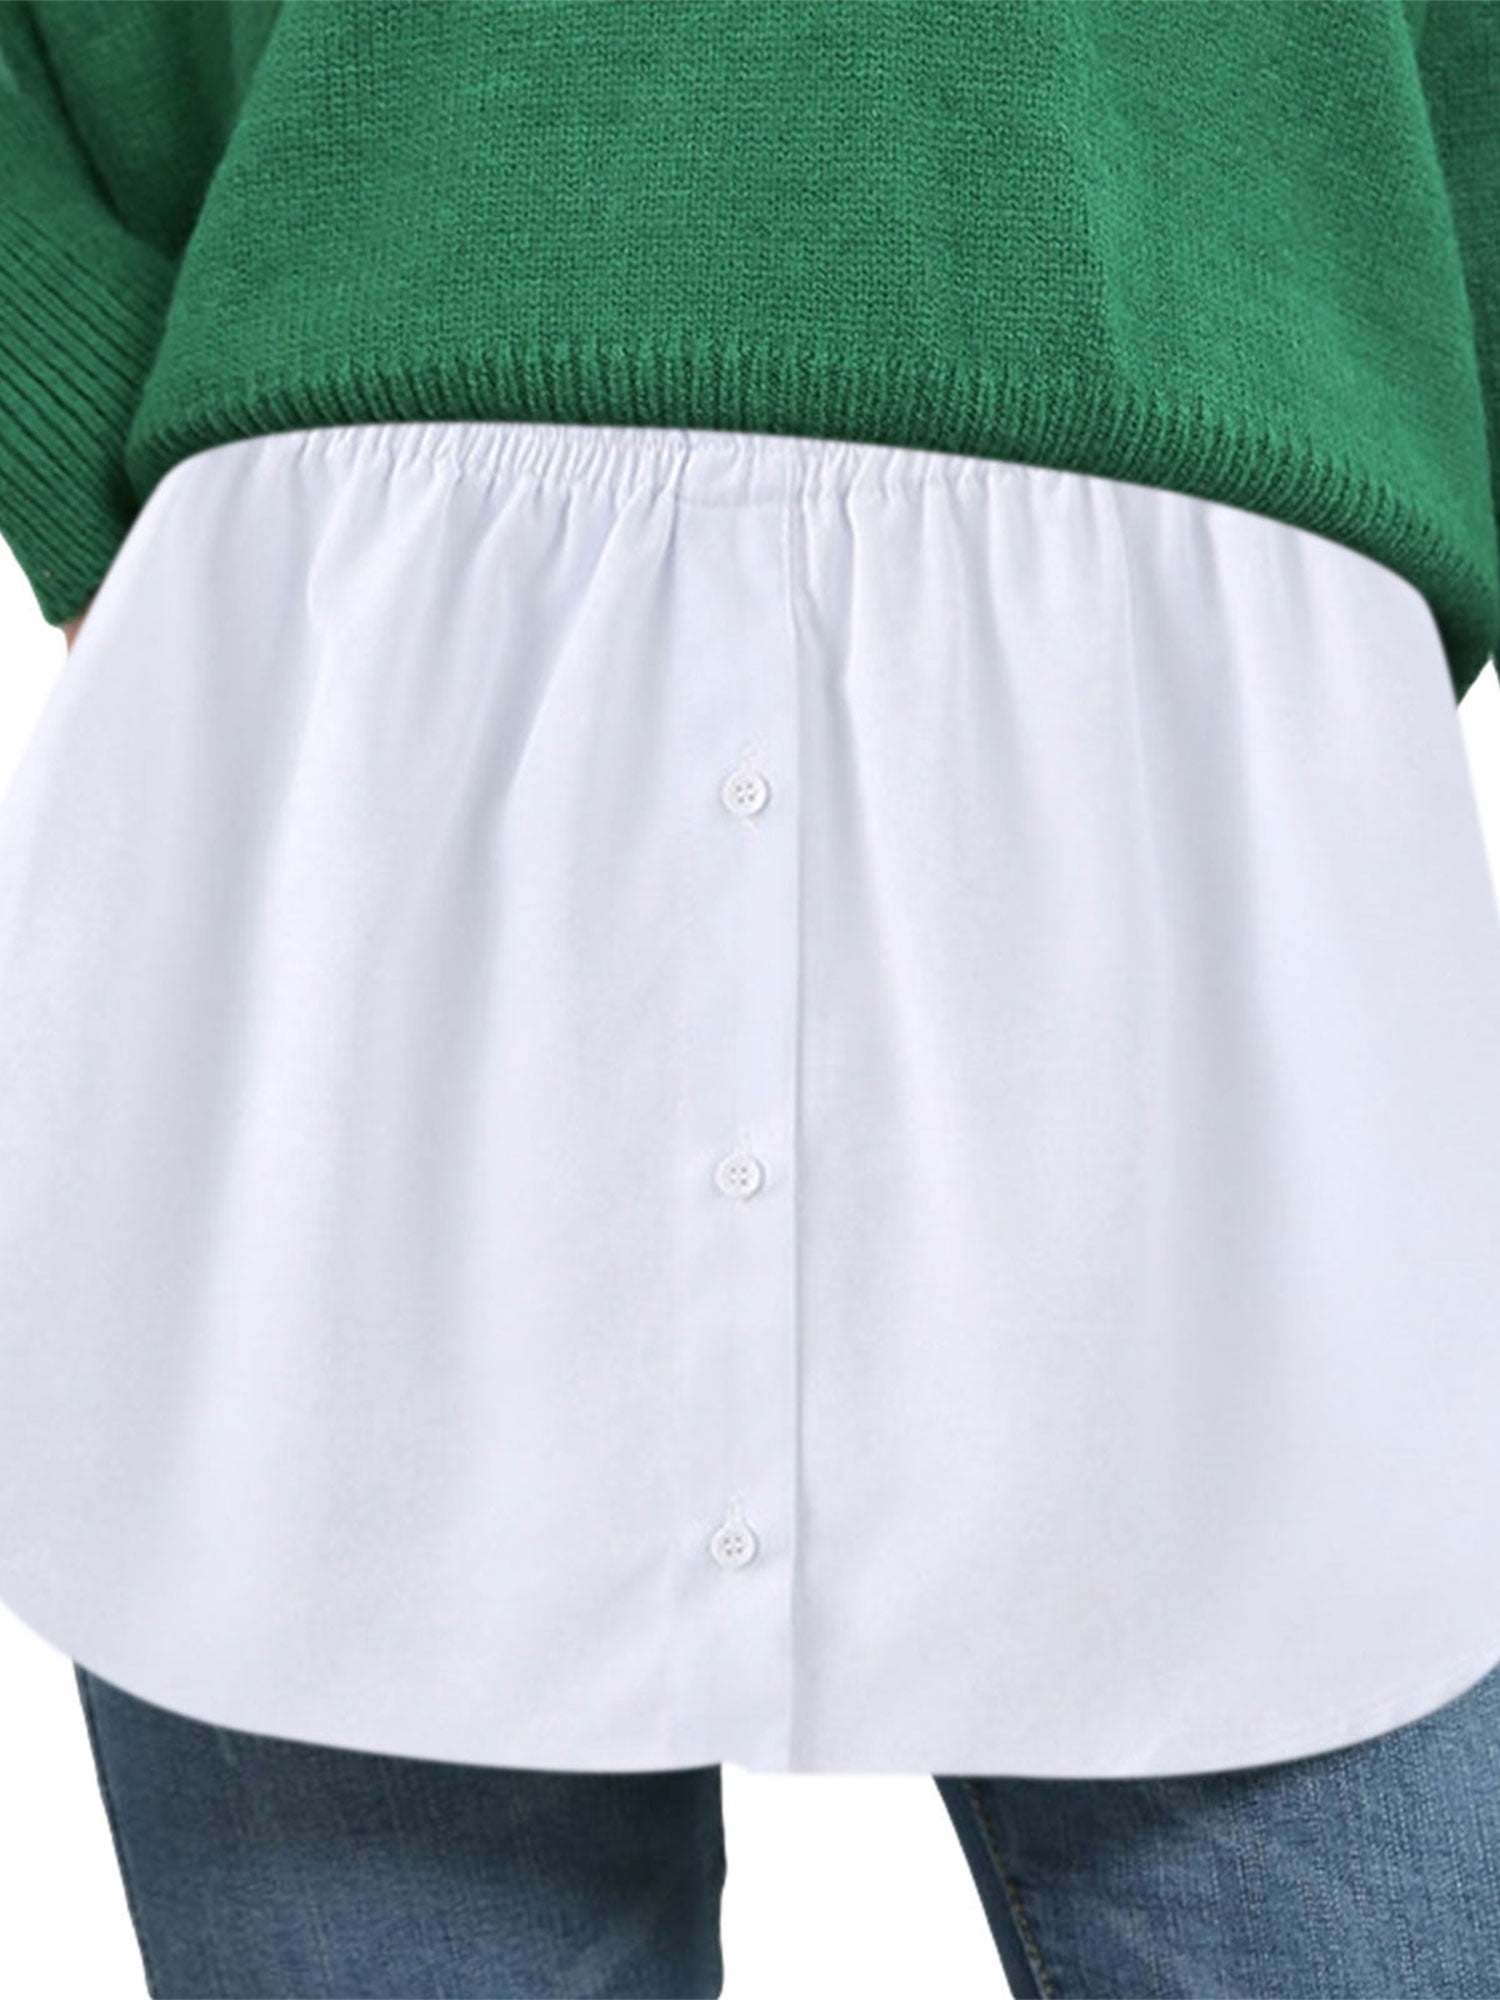 2 Pieces Skirt Shirt Extenders Adjustable Layering Fake Top Lower Sweep Skirt Half-Length Splitting A Version Fake Hem A-line Skirt for Women Girls